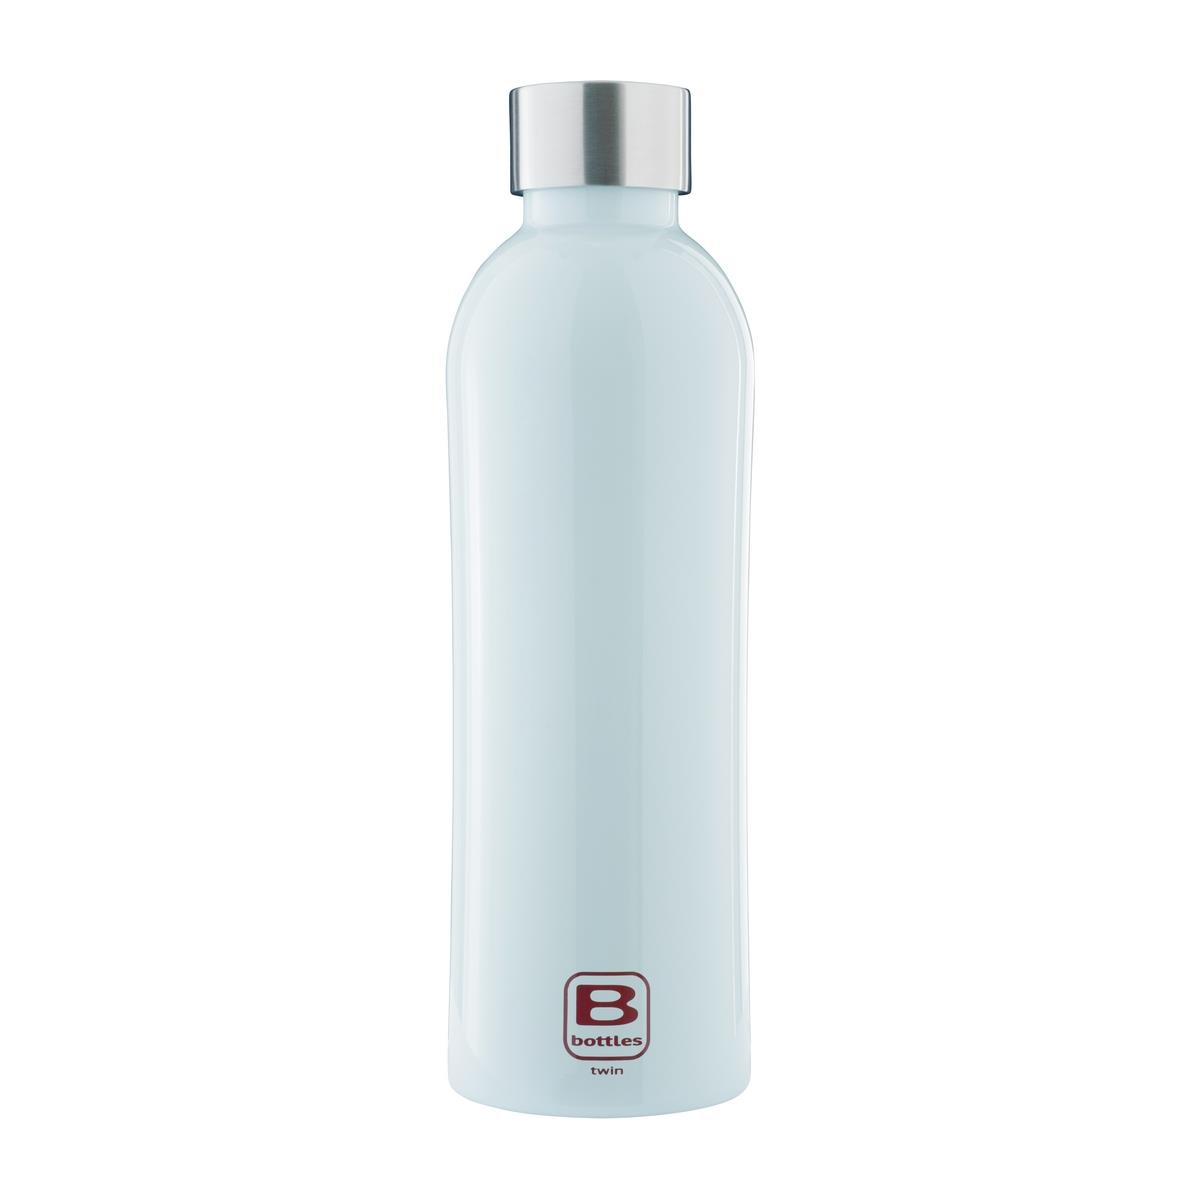 B Bottles Twin – Hellblau – 800 ml – Doppelwandige Thermoflasche aus 18/10 Edelstahl